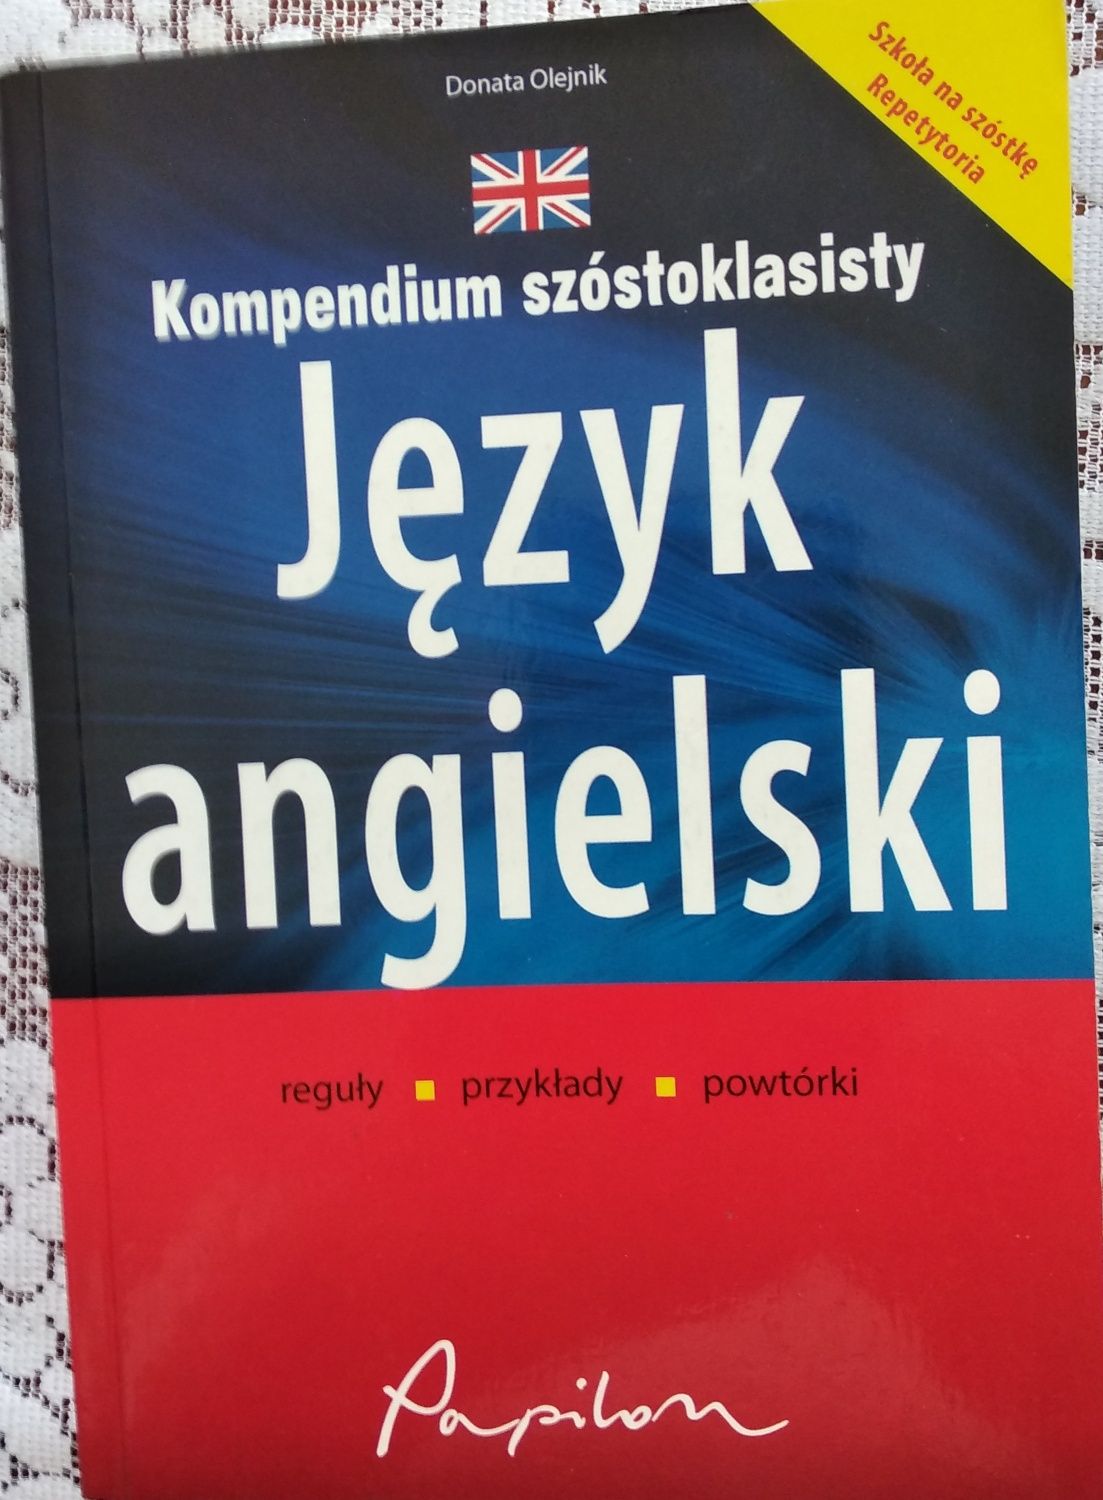 Książka Język angielski - kompendium szóstoklasisty